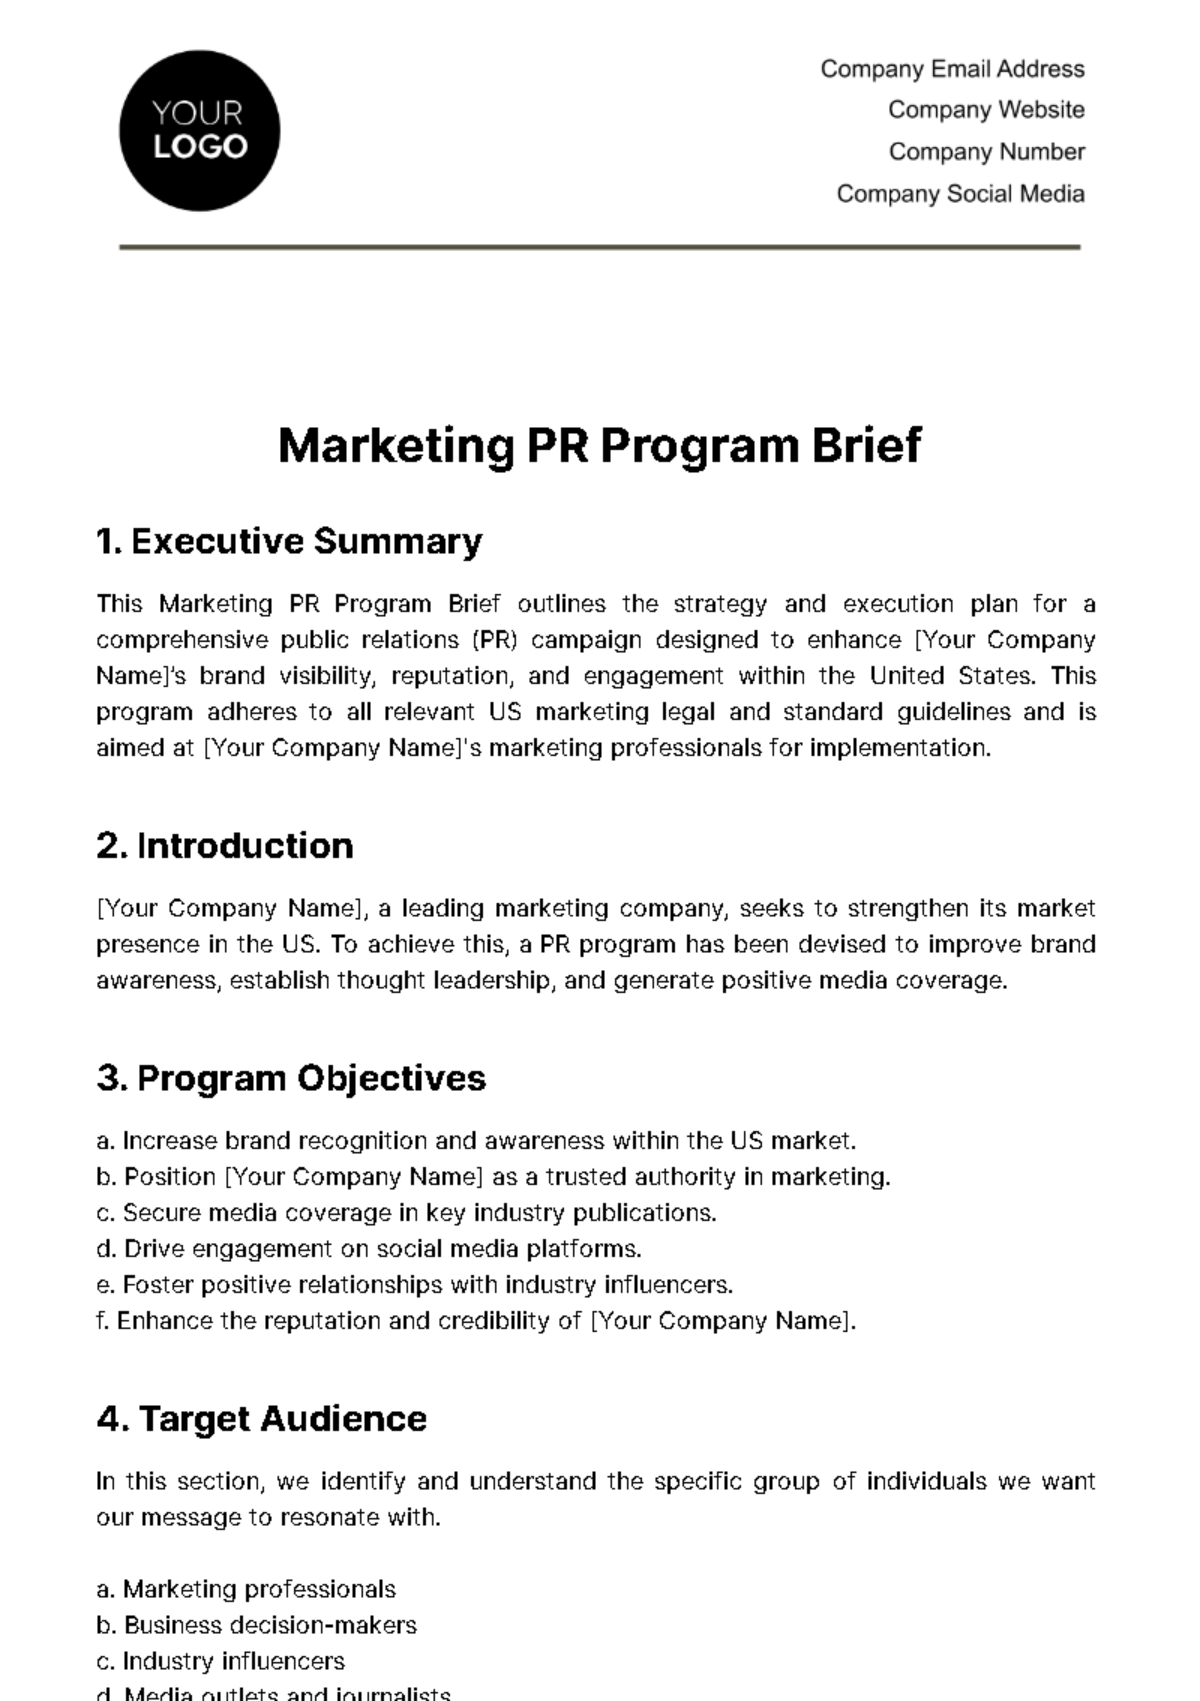 Free Marketing PR Program Brief Template